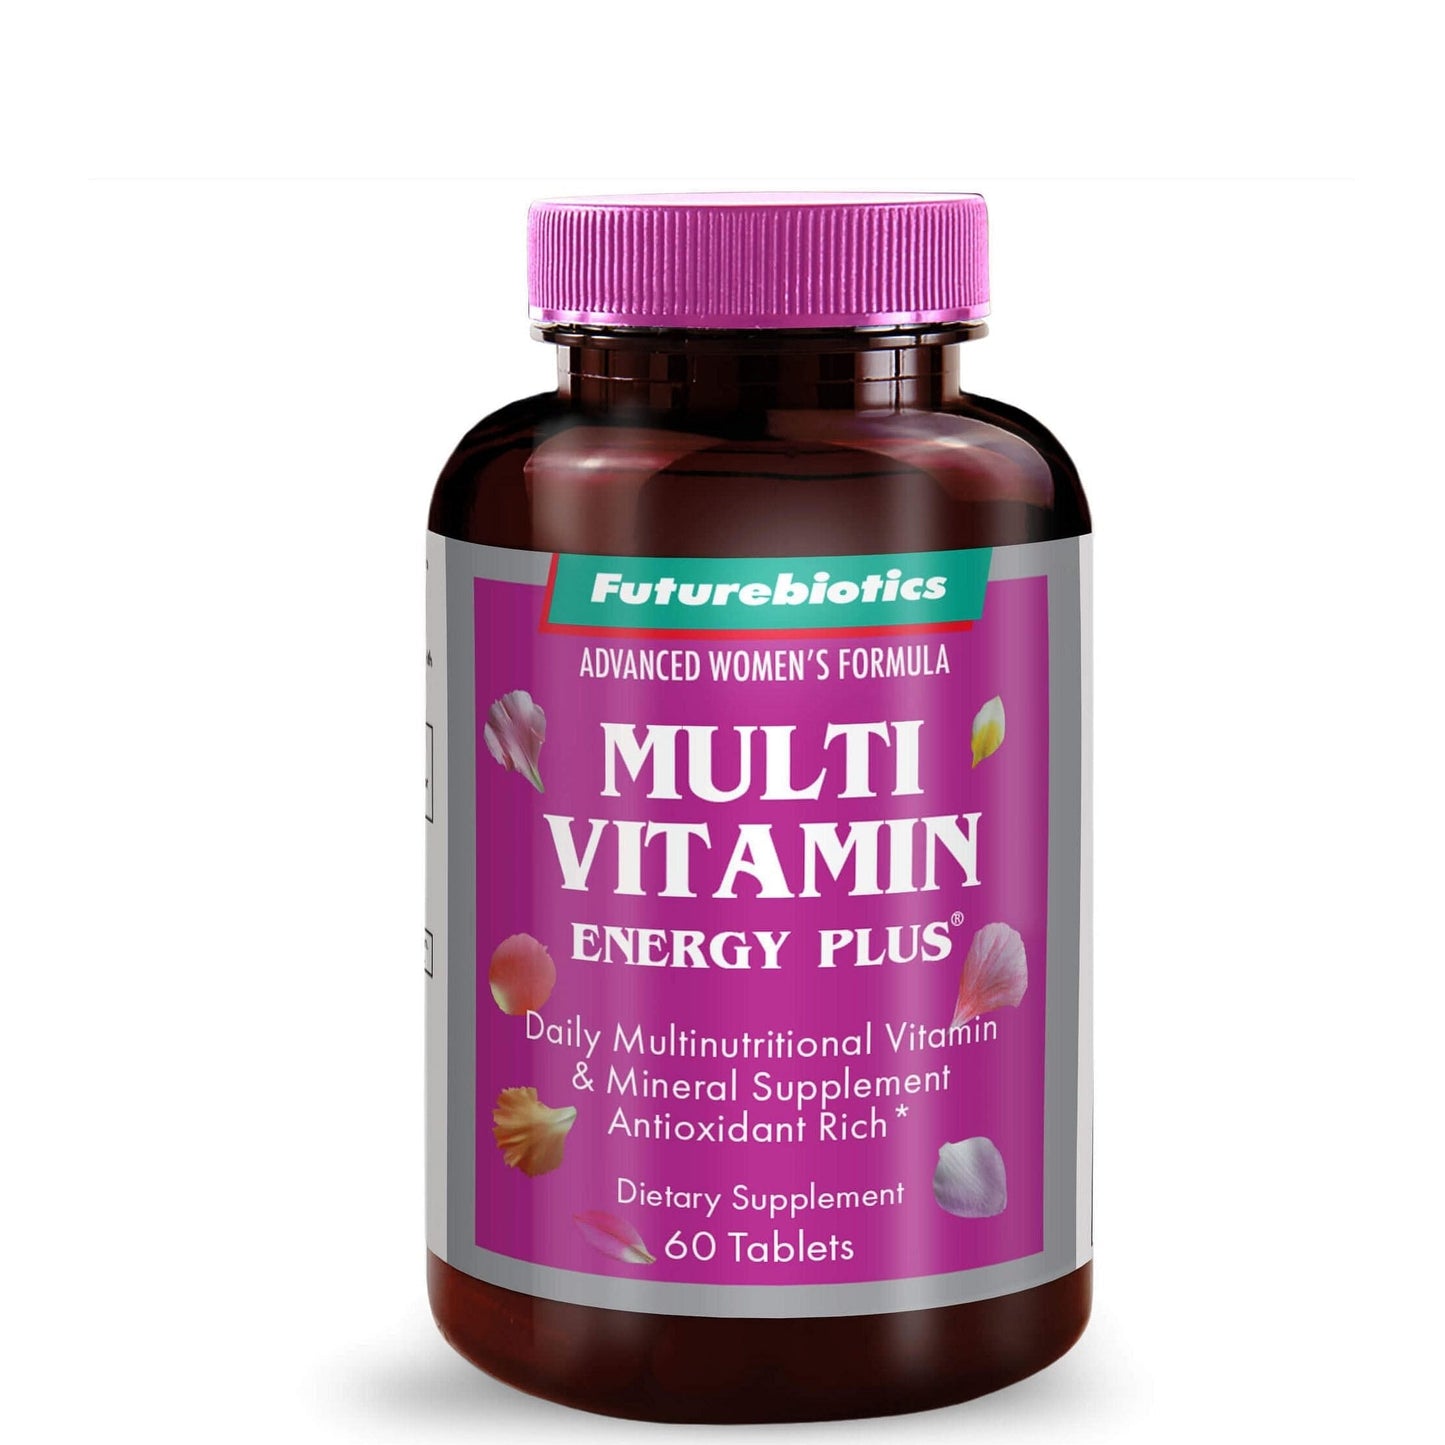 Futurebiotics Multivitamin Energy Plus for Women, 60 Tablets